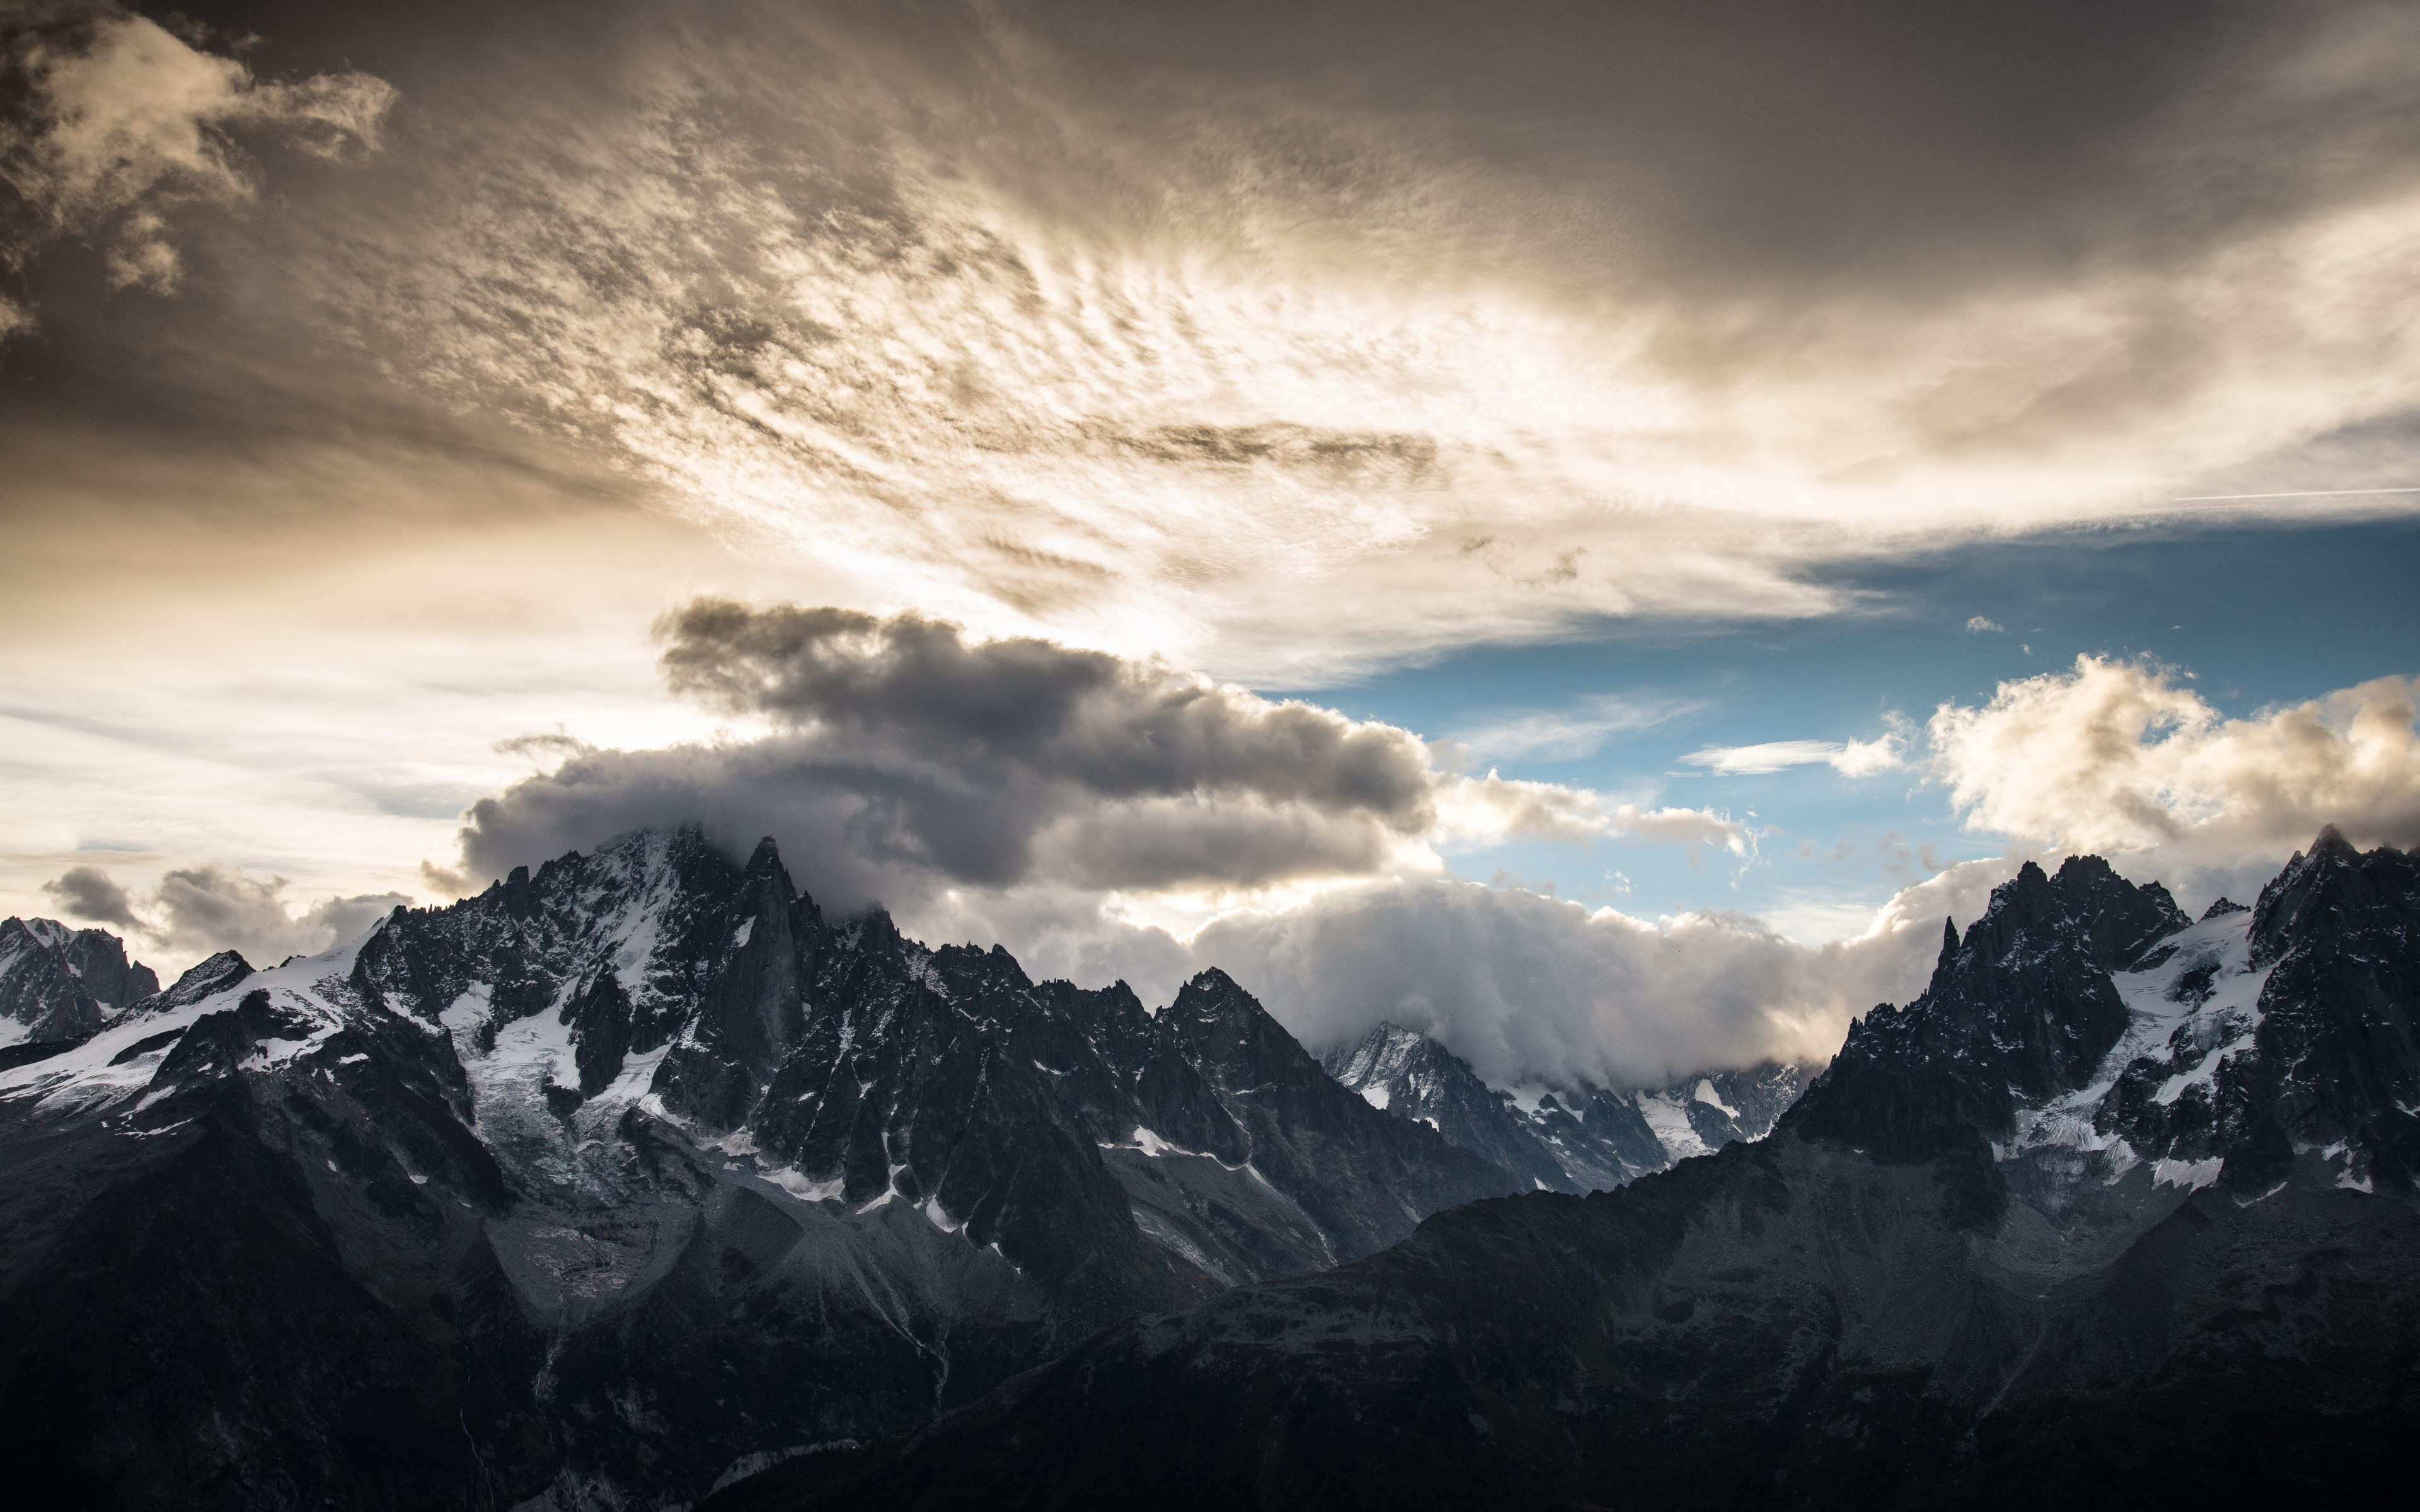 Download wallpaper: Mountain peaks, clouds, landscape